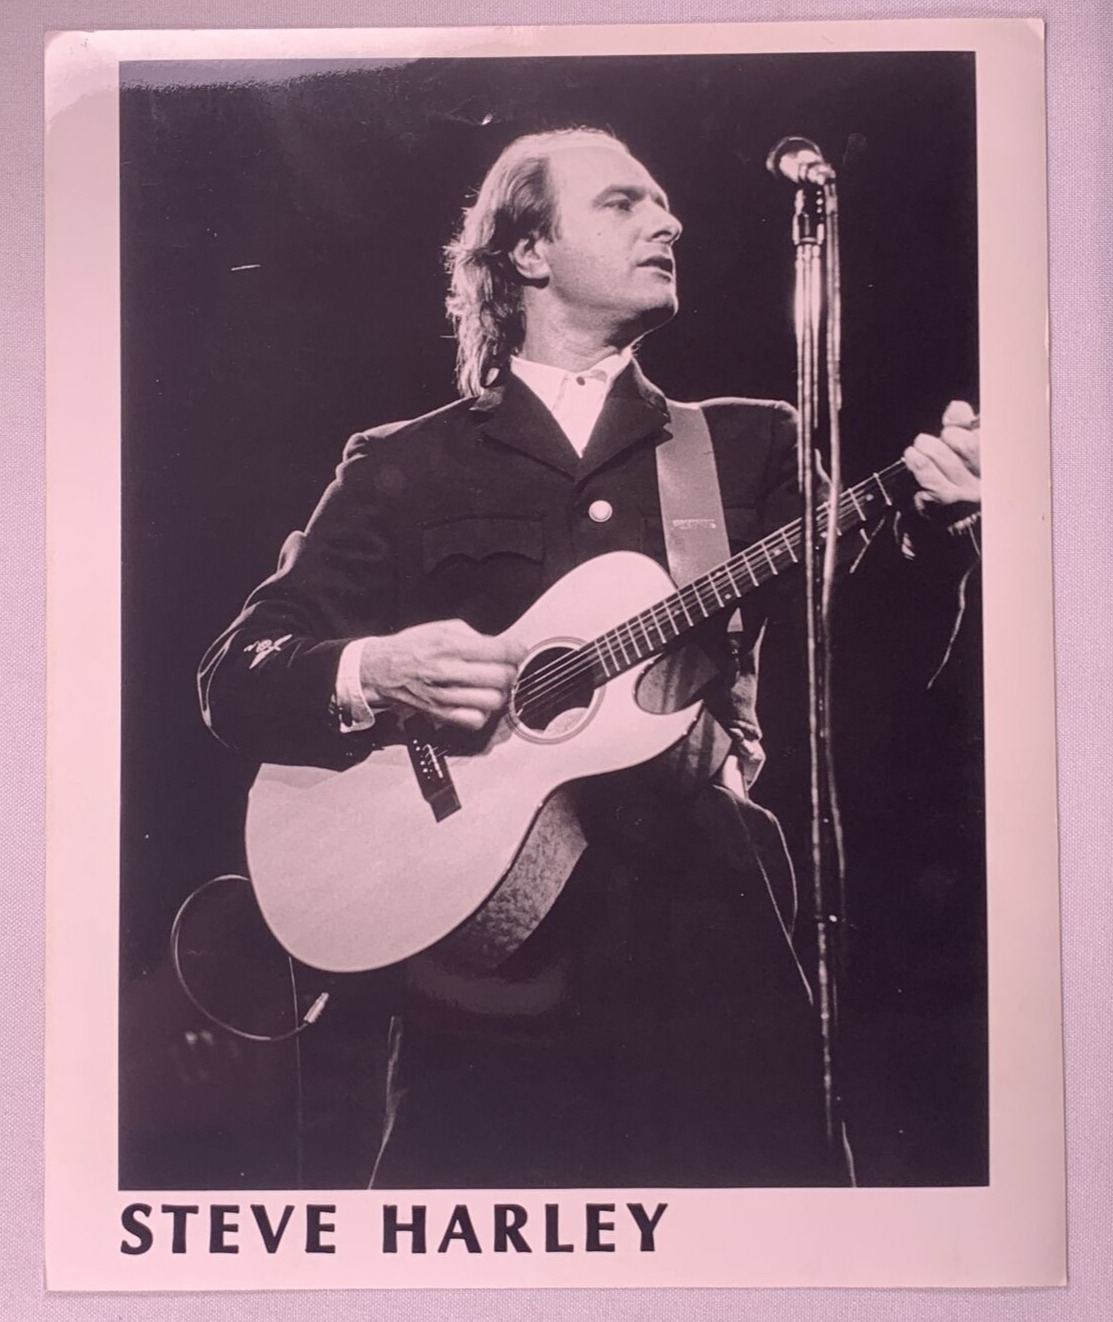 Steve Harley Photograph Original Vintage Black And White Promo May 1992